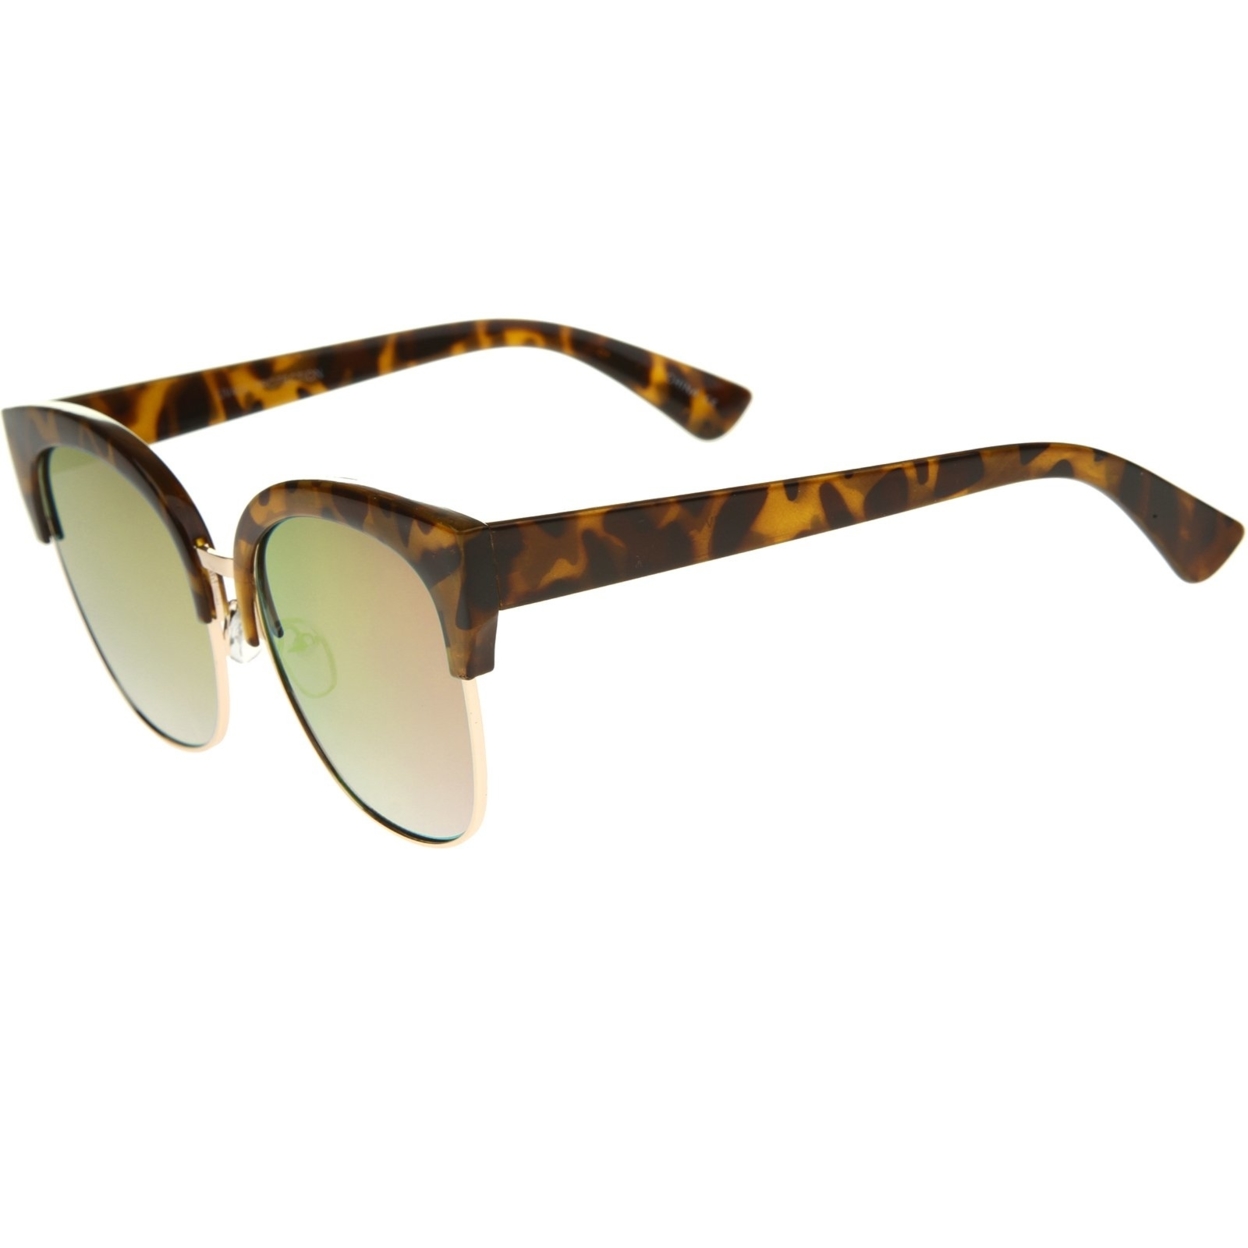 Modern Oversized Half-Frame Color Mirror Flat Lens Cat Eye Sunglasses 58mm - Black / Gold Mirror